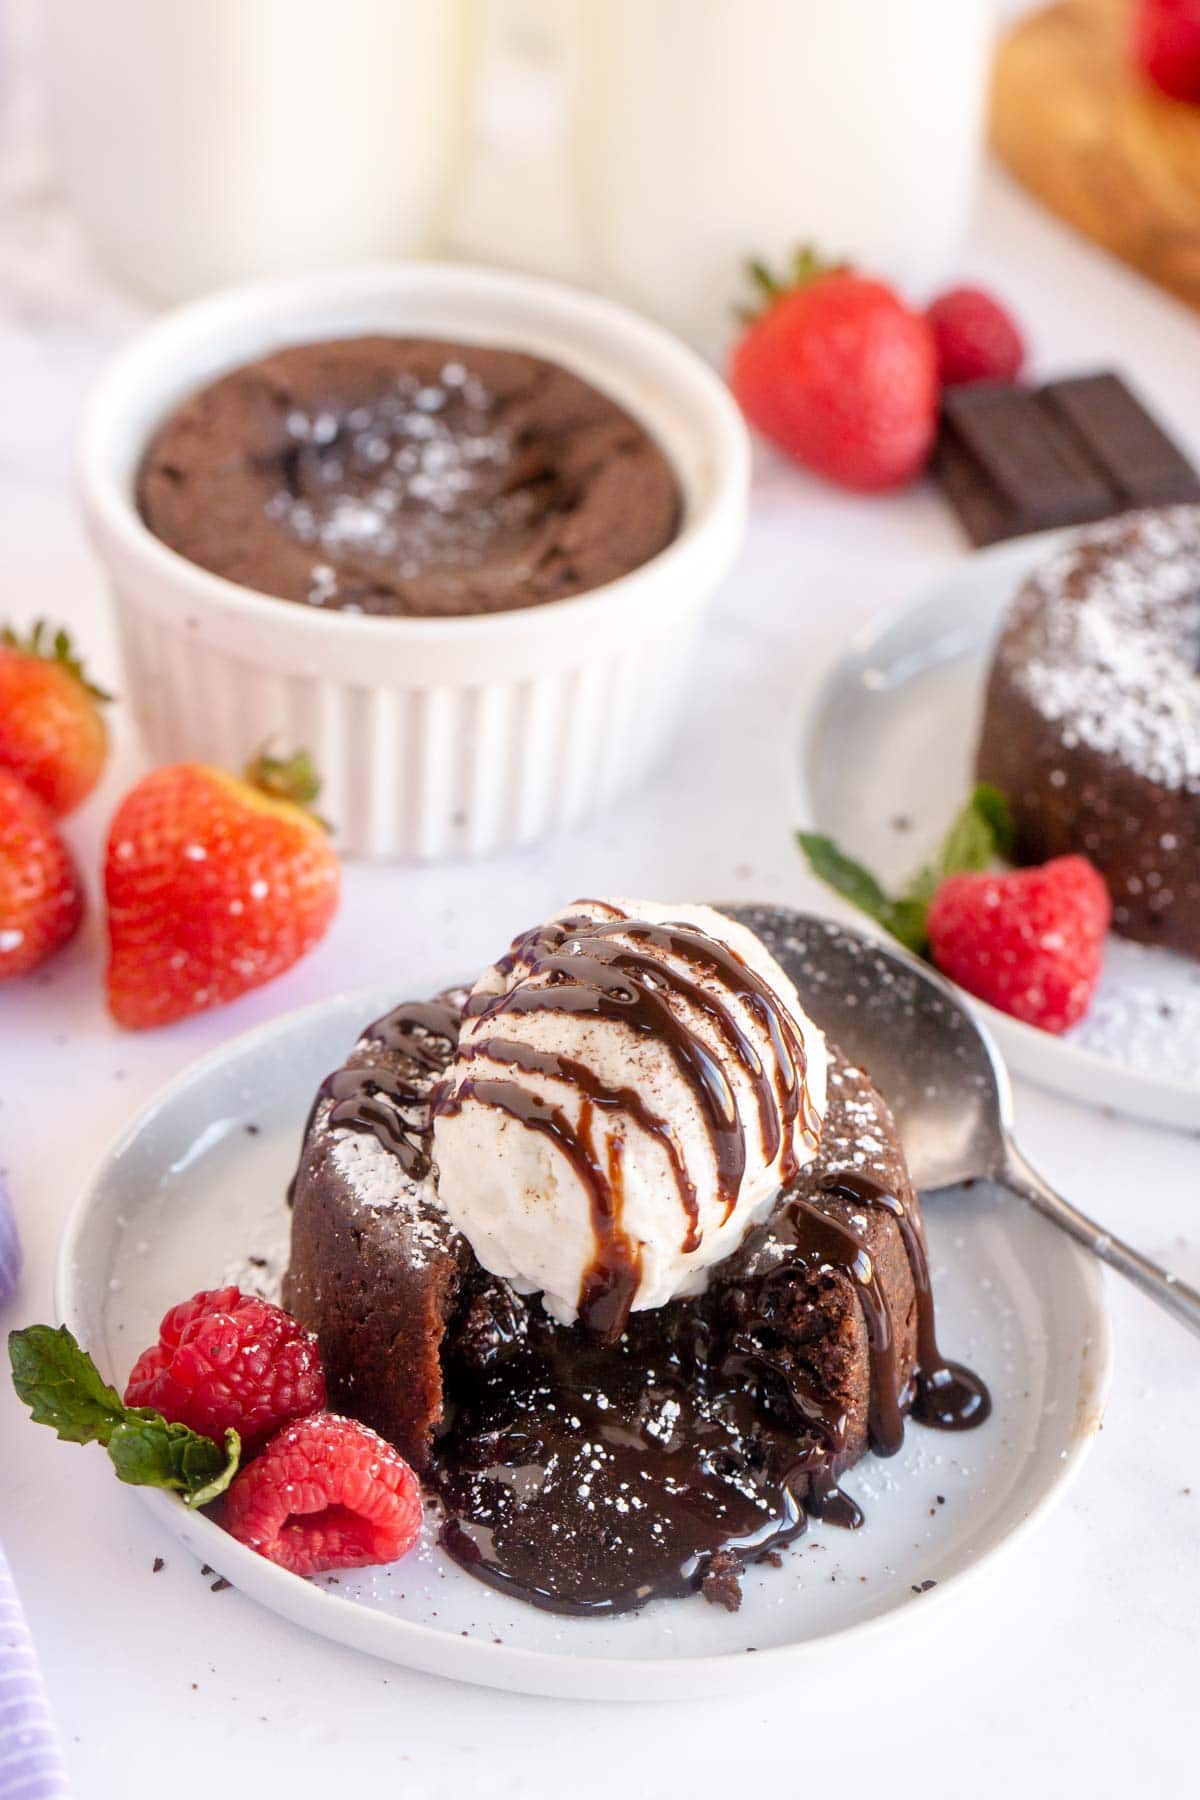 Chocolate lava cake with ice cream on top